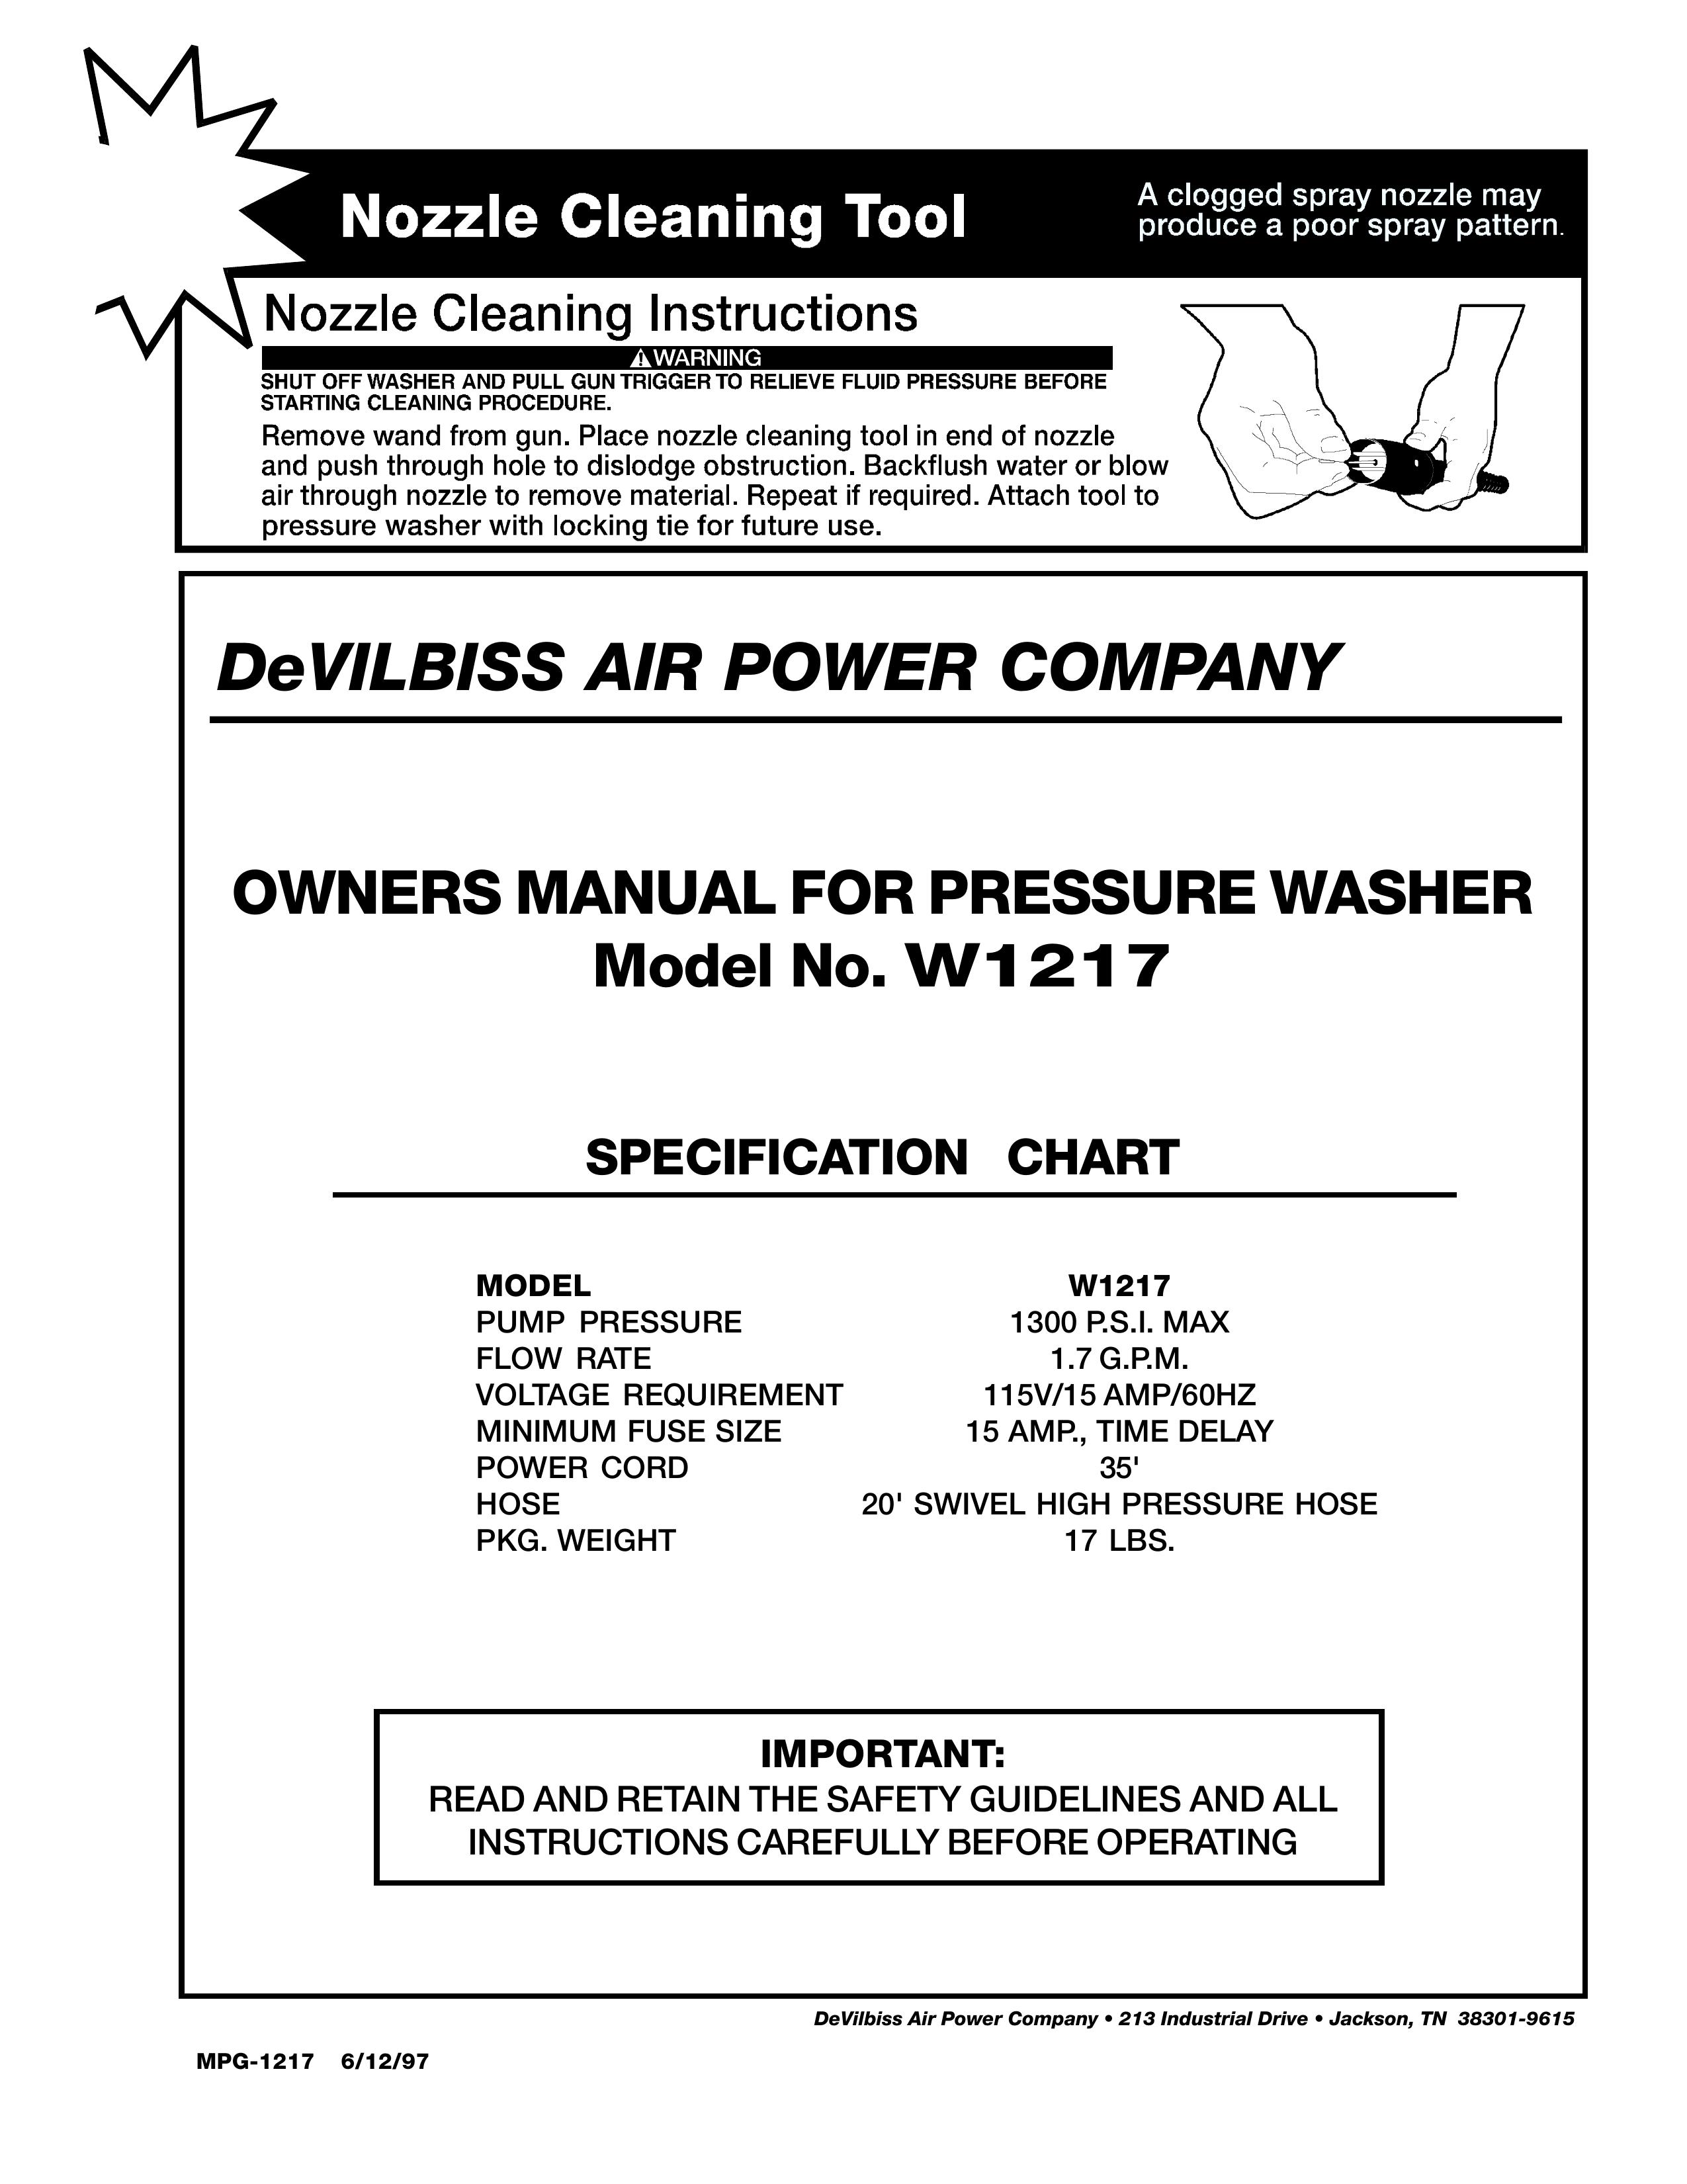 DeVillbiss Air Power Company W1217 Pressure Washer User Manual